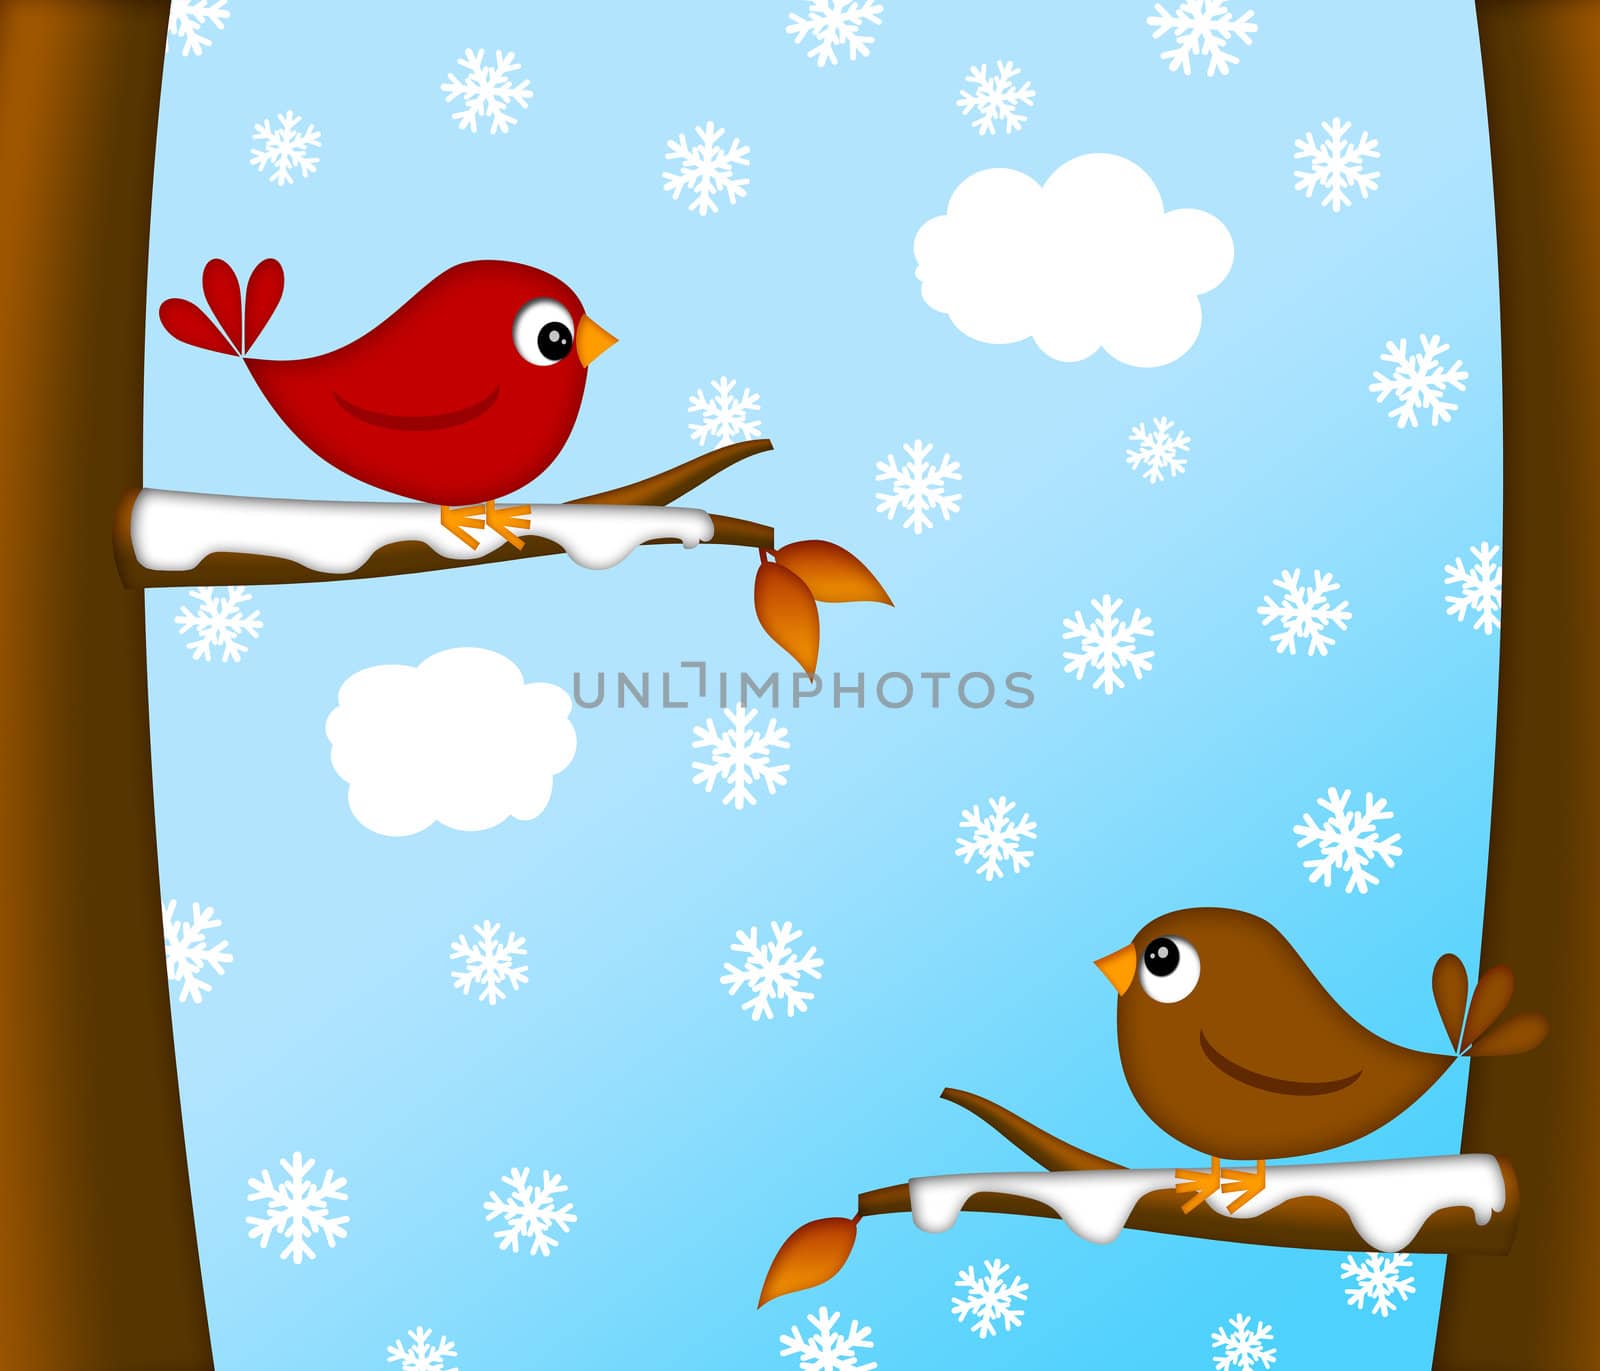 Christmas Red Cardinal Bird Pair Sitting on Tree Branches Winter Scene Illustration